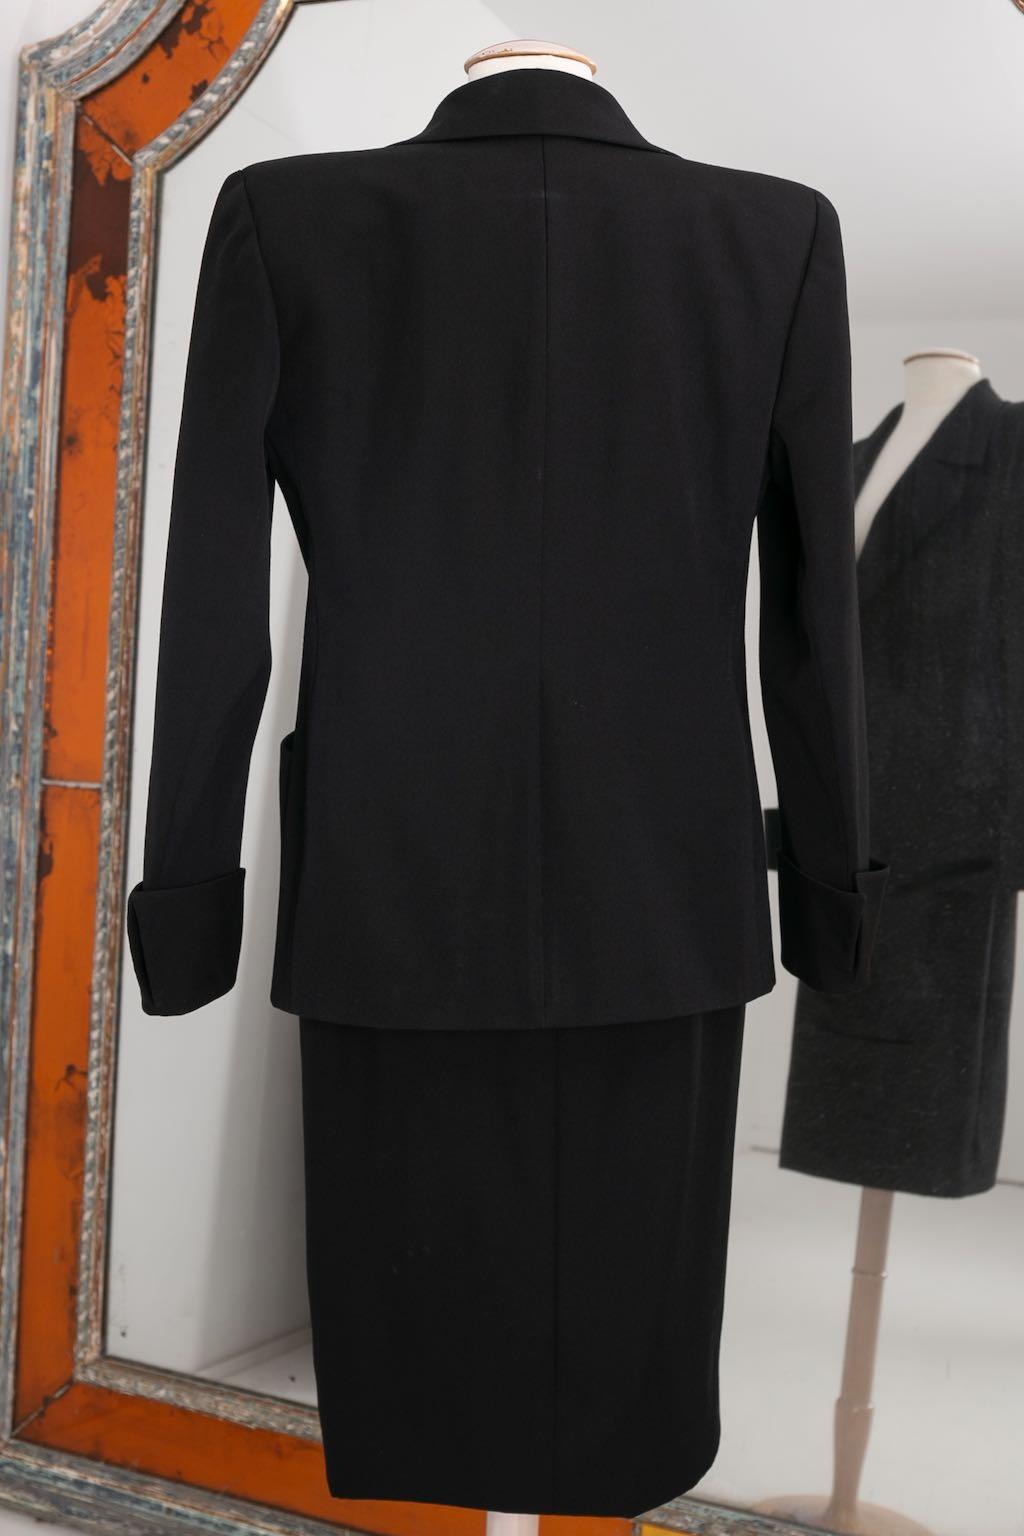 Yves Saint Laurent Haute Couture Black Skirt and Jacket Set, circa 1981/1982 14